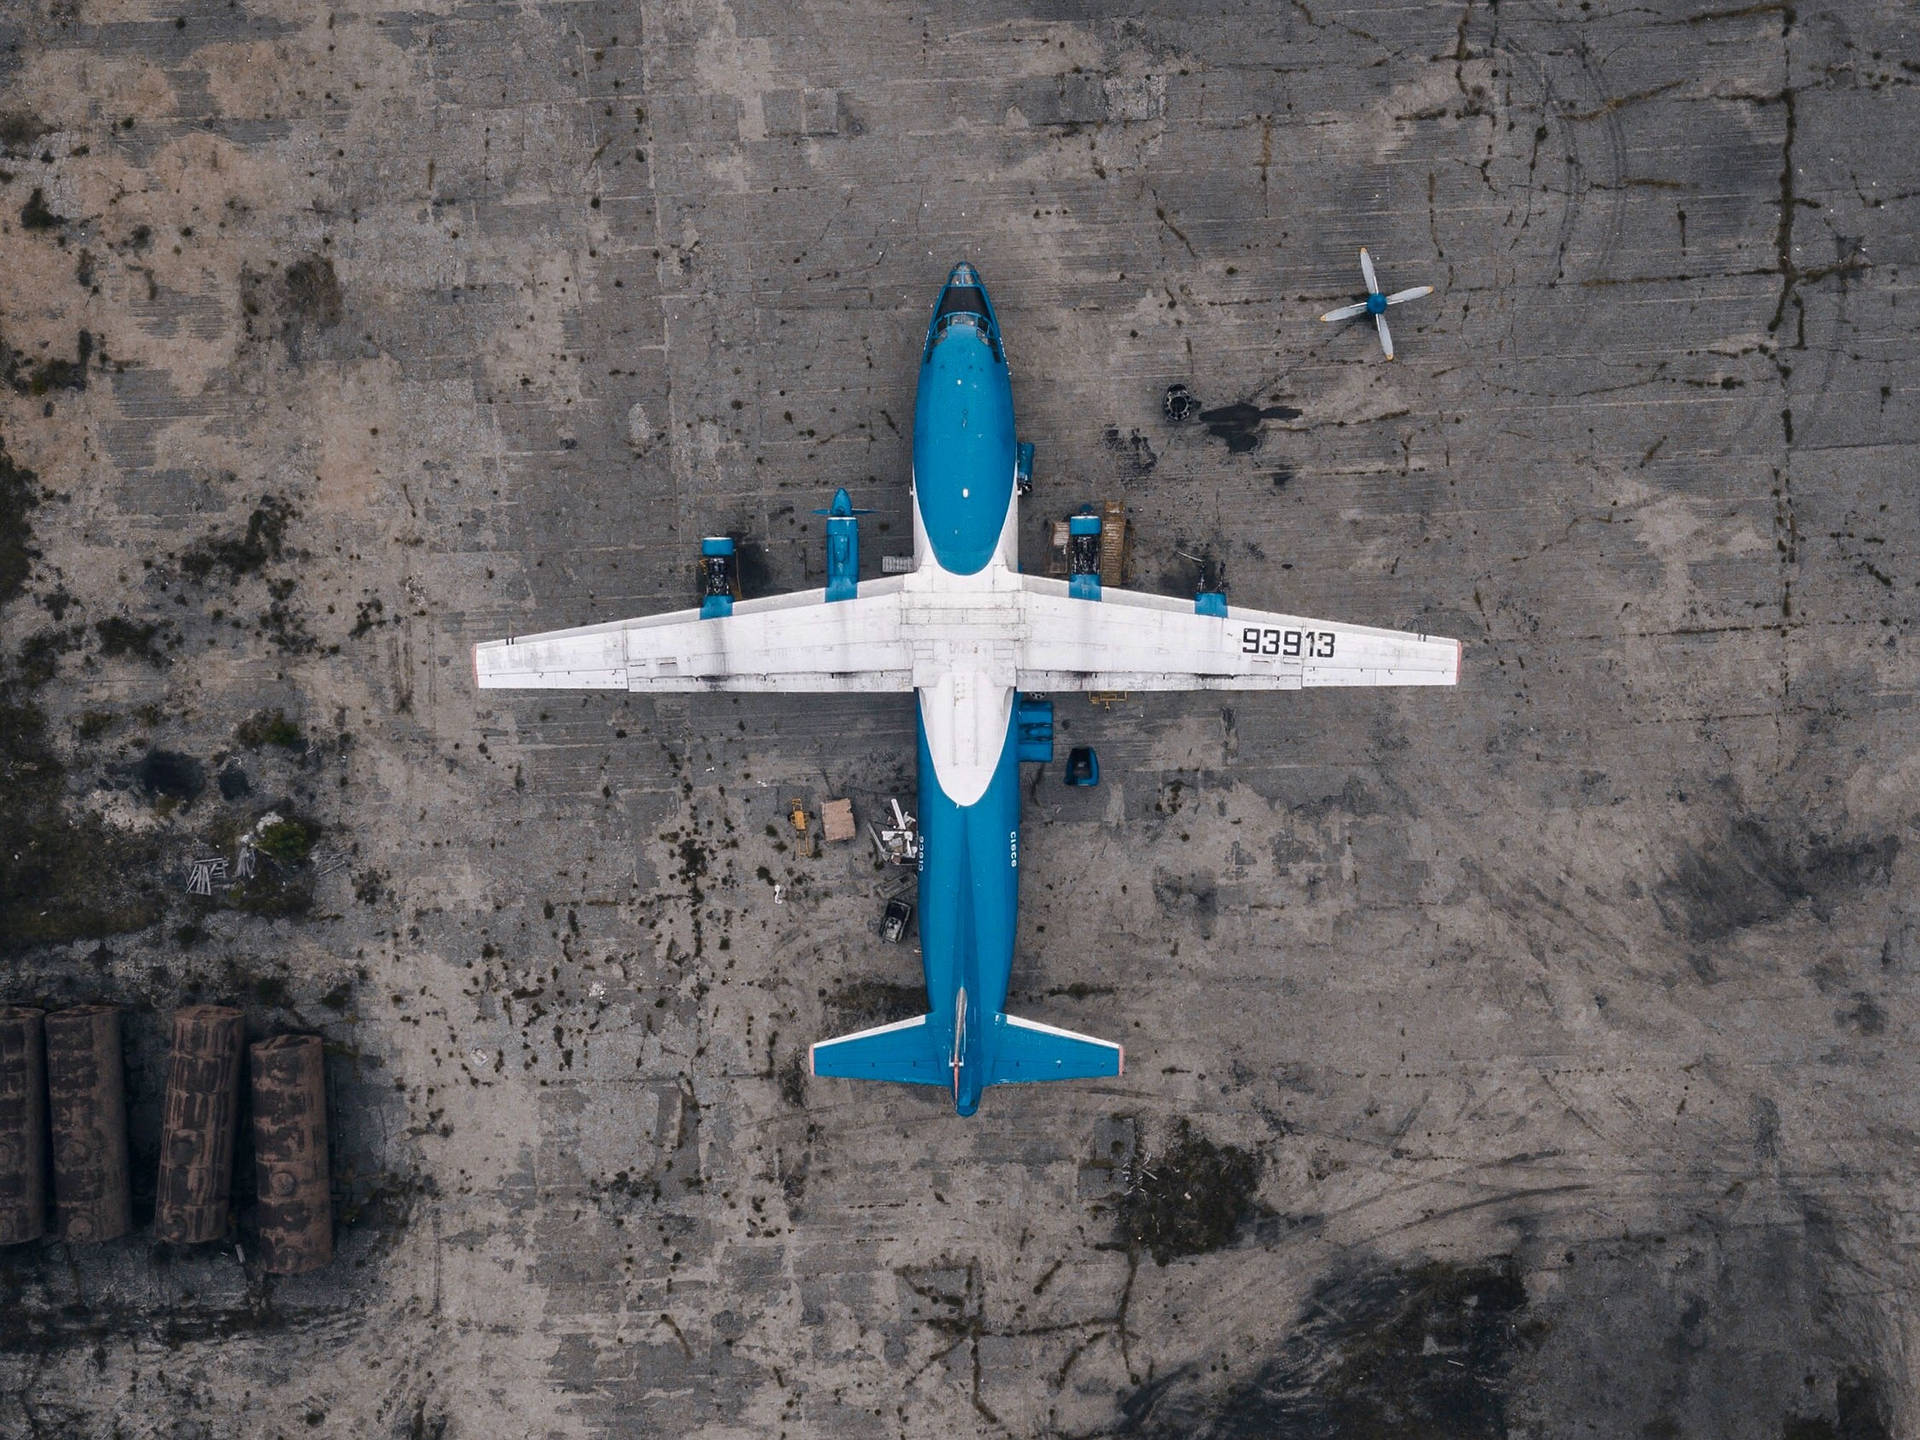 Blue Hd Plane Aerial View